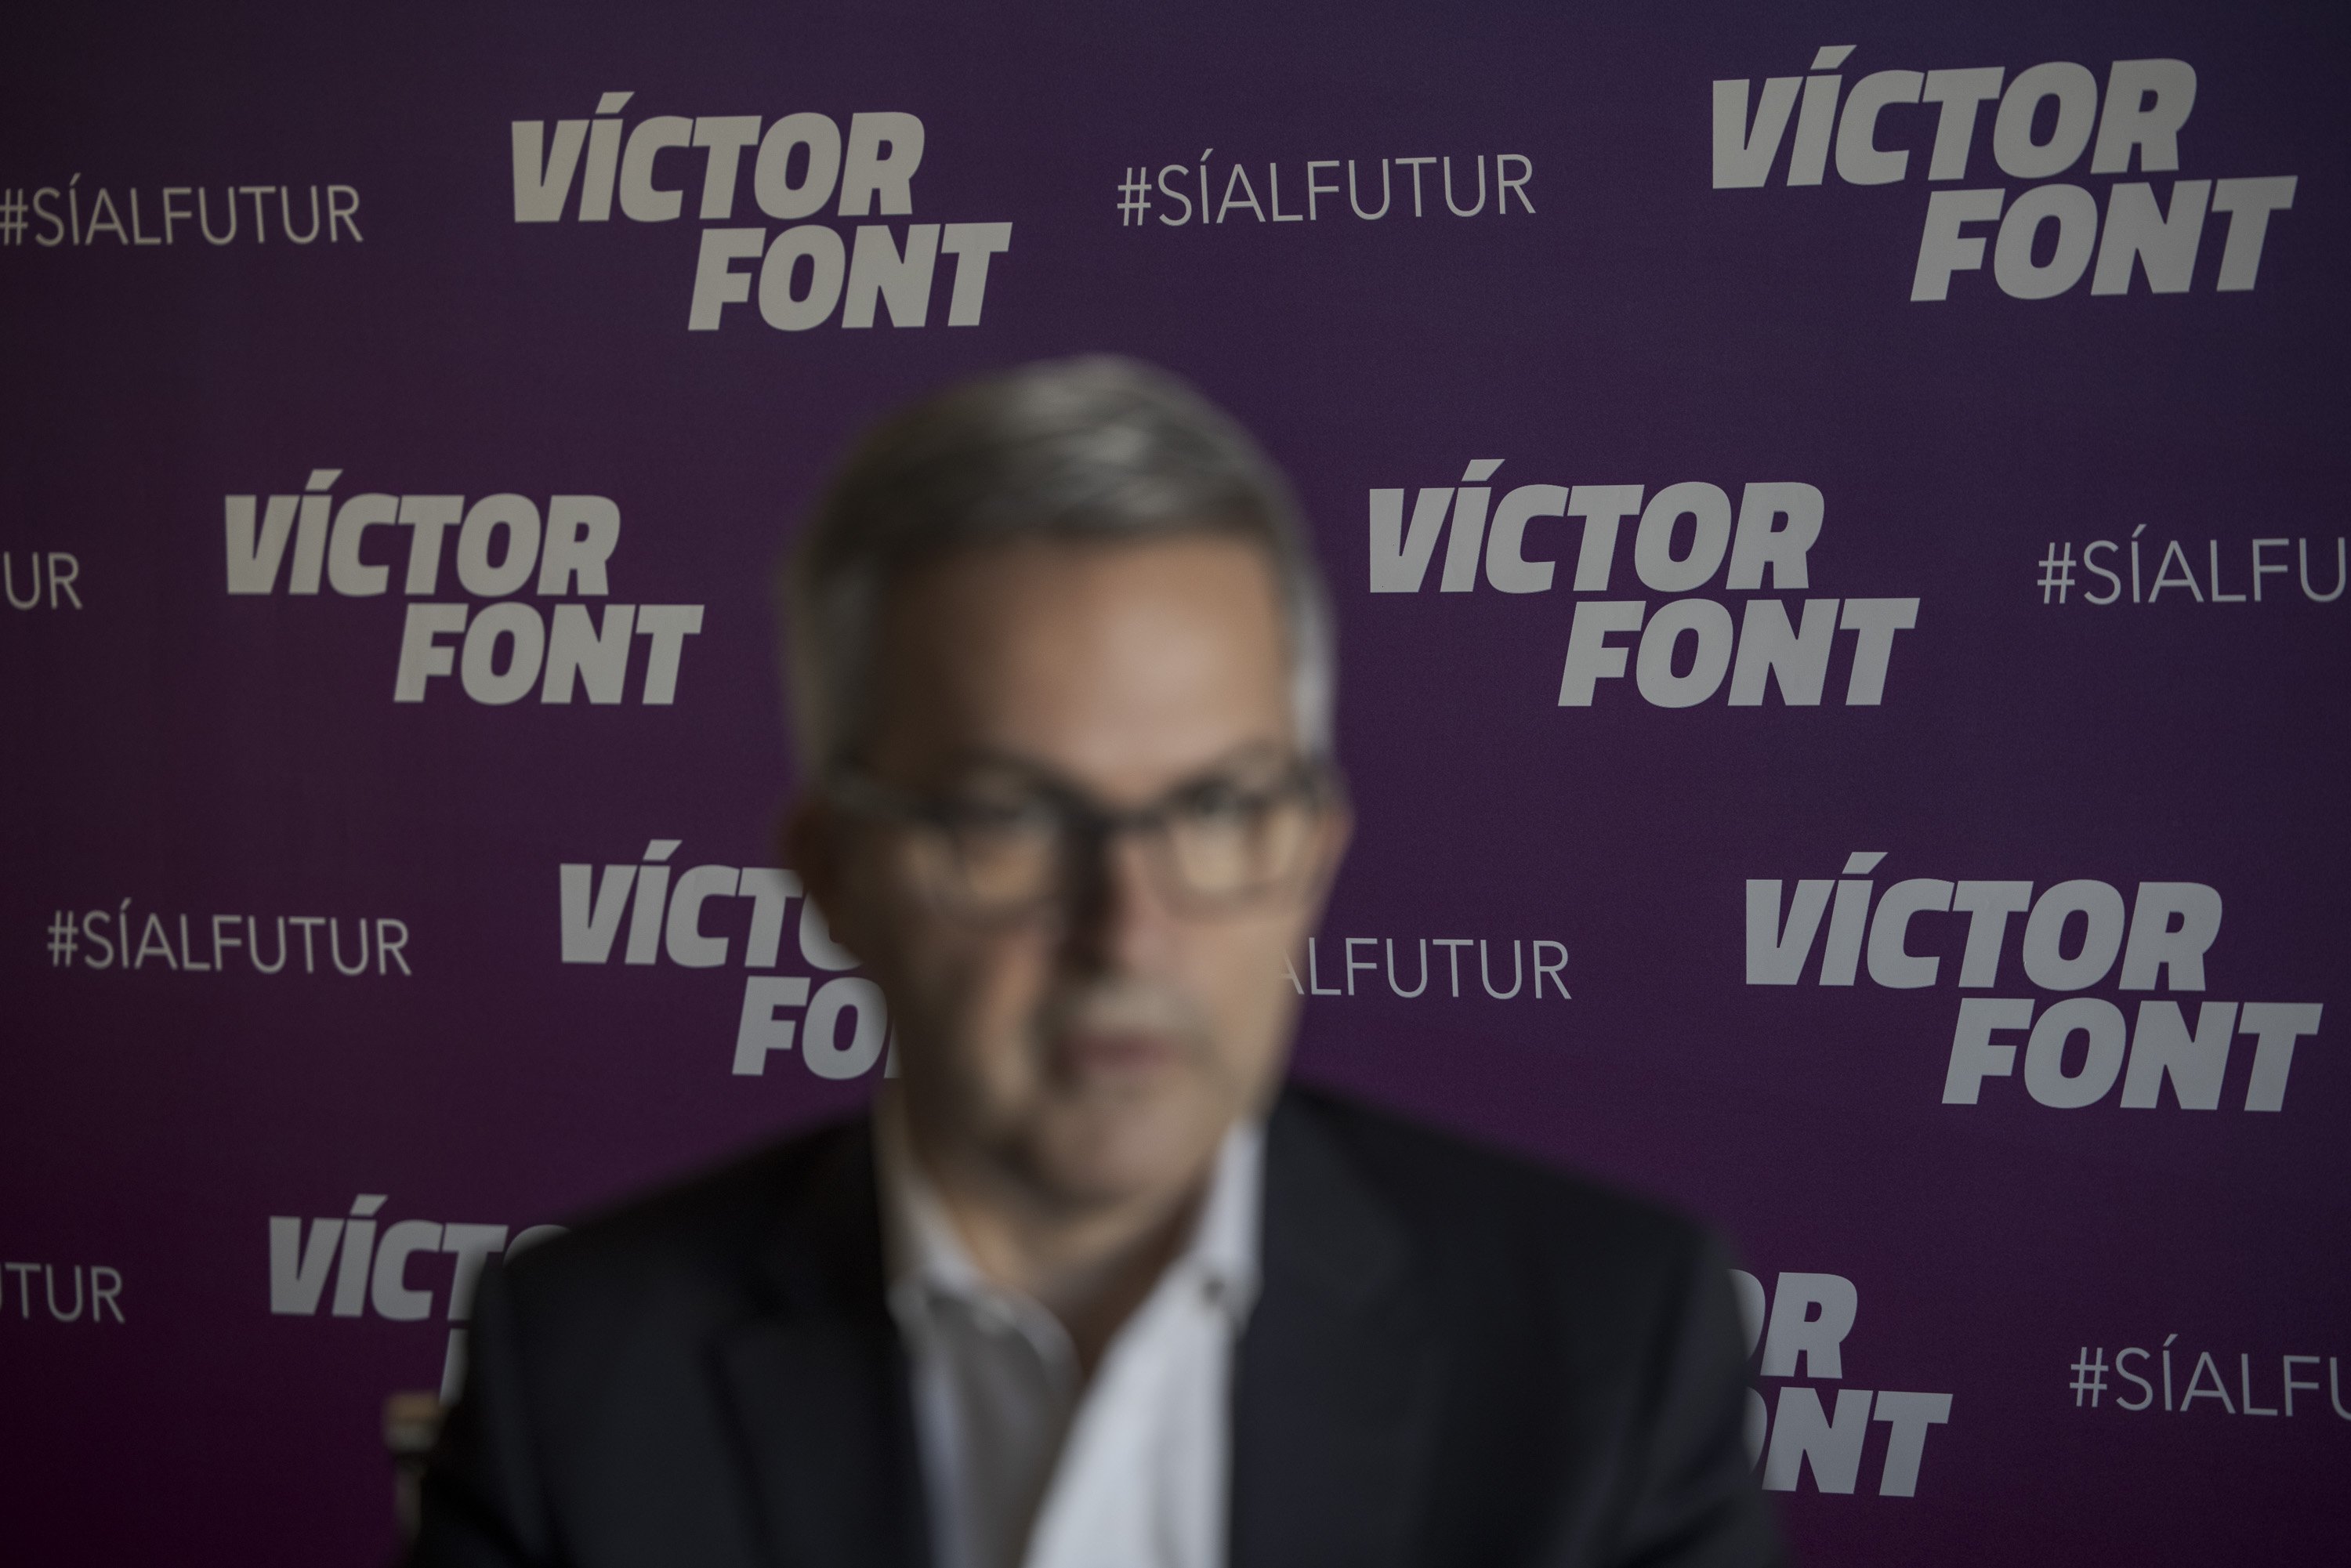 El día de la marmota: Víctor Font vuelve a cargar contra Laporta